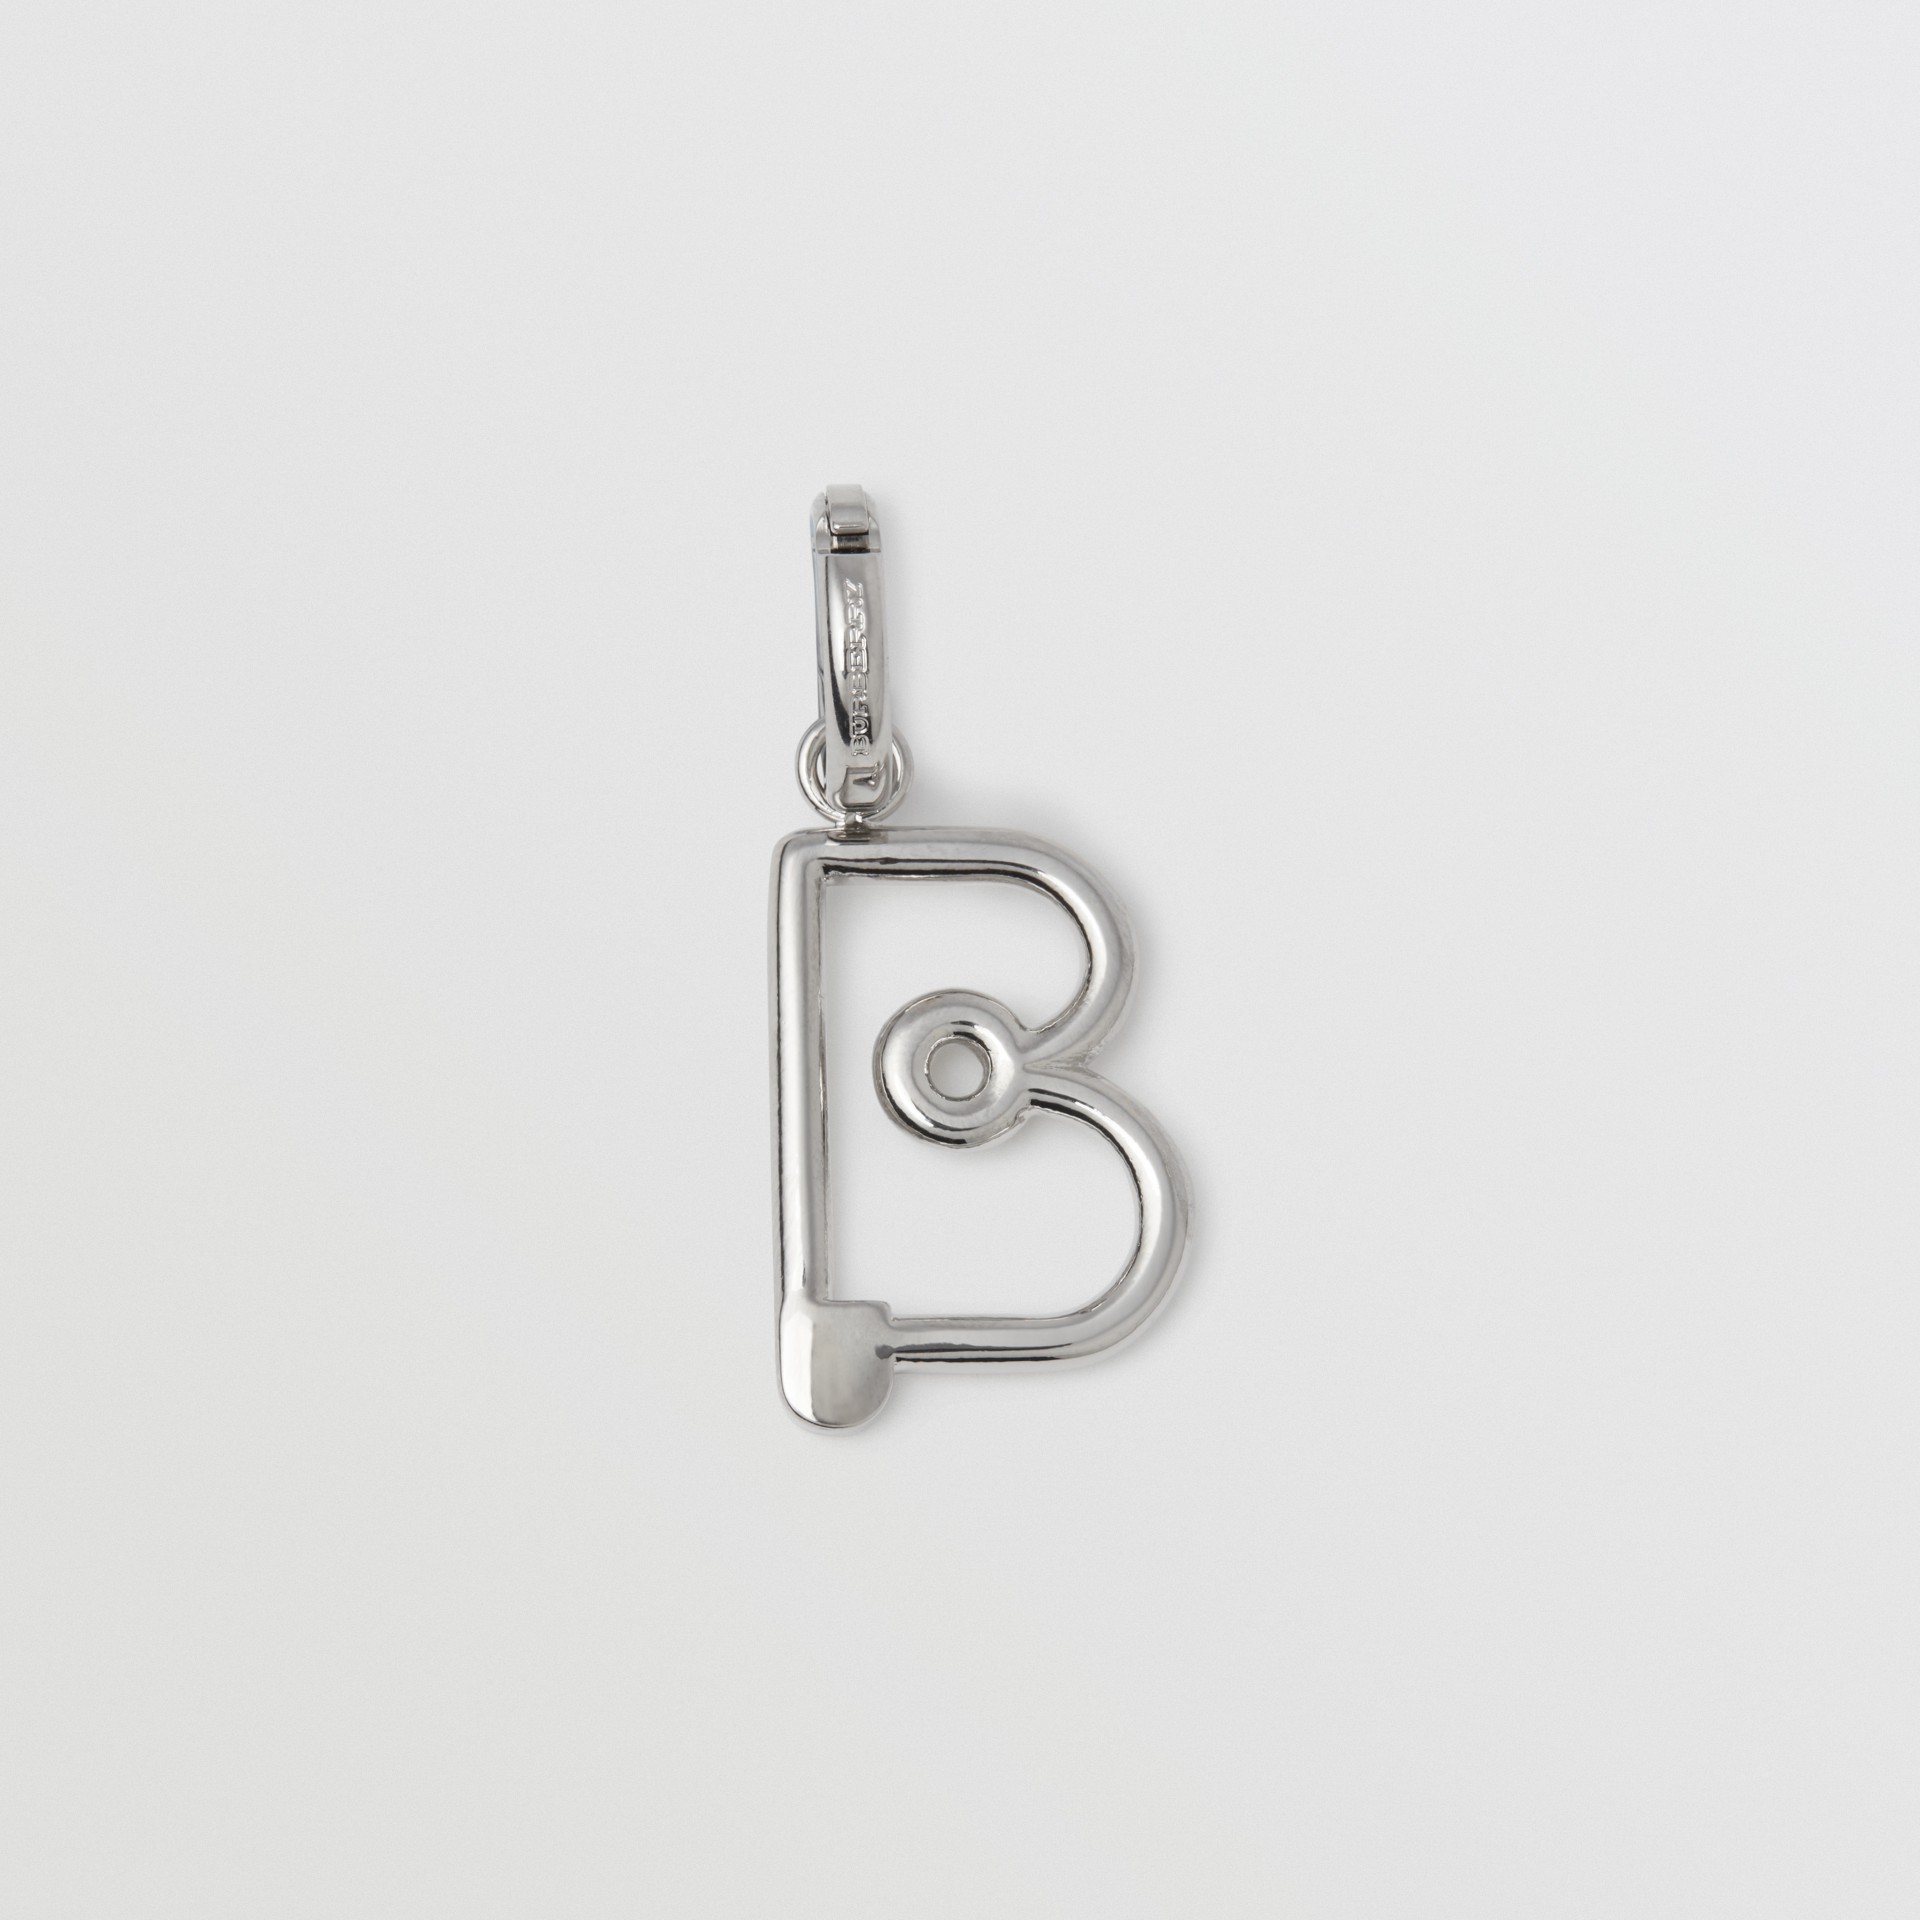 BURBERRY Kilt Pin ‘B’ Alphabet Charm